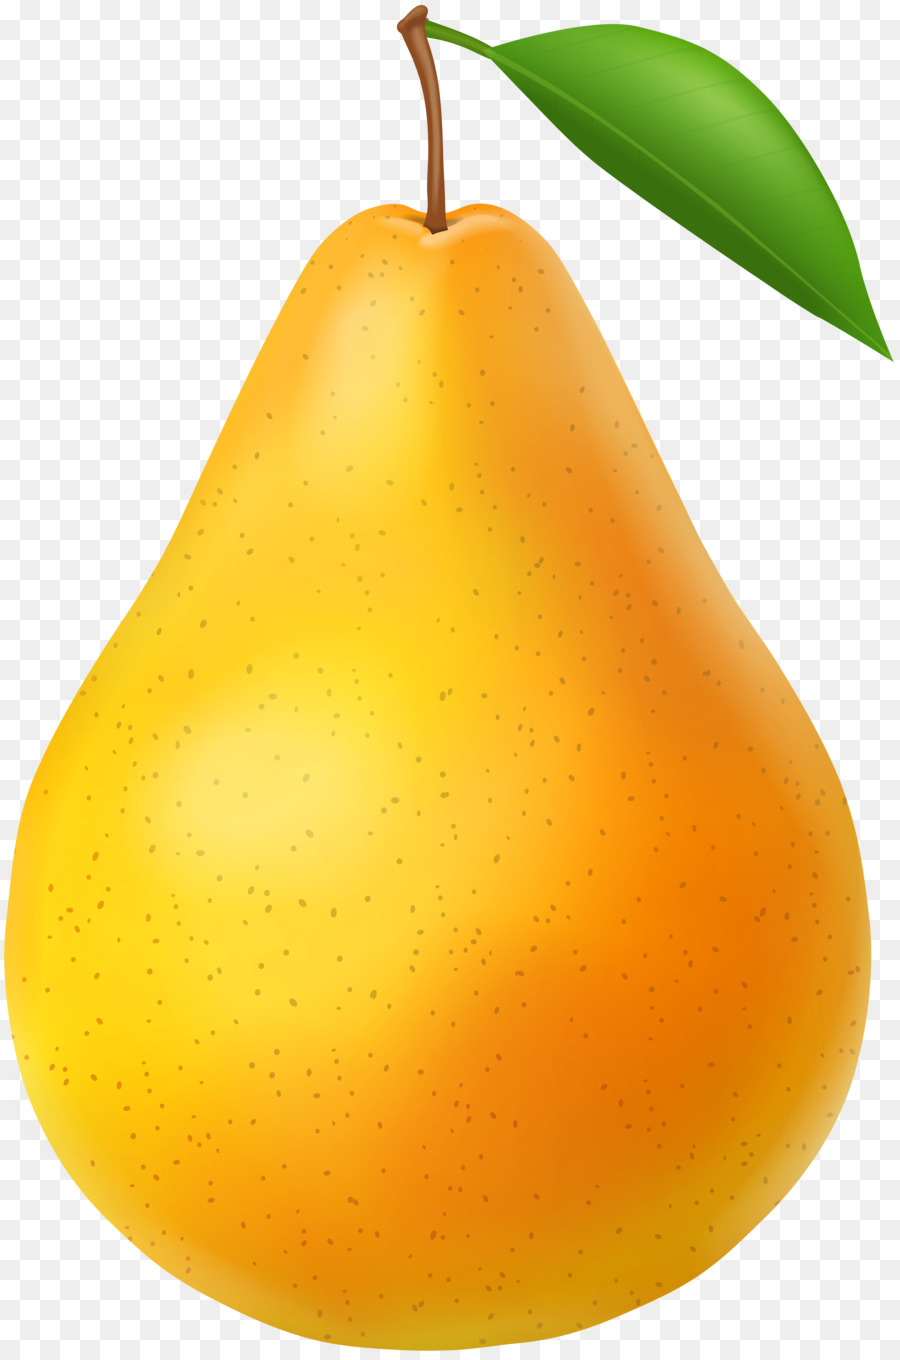 Pear Clip art - peas png download - 3973*6000 - Free Transparent Pear png Download.